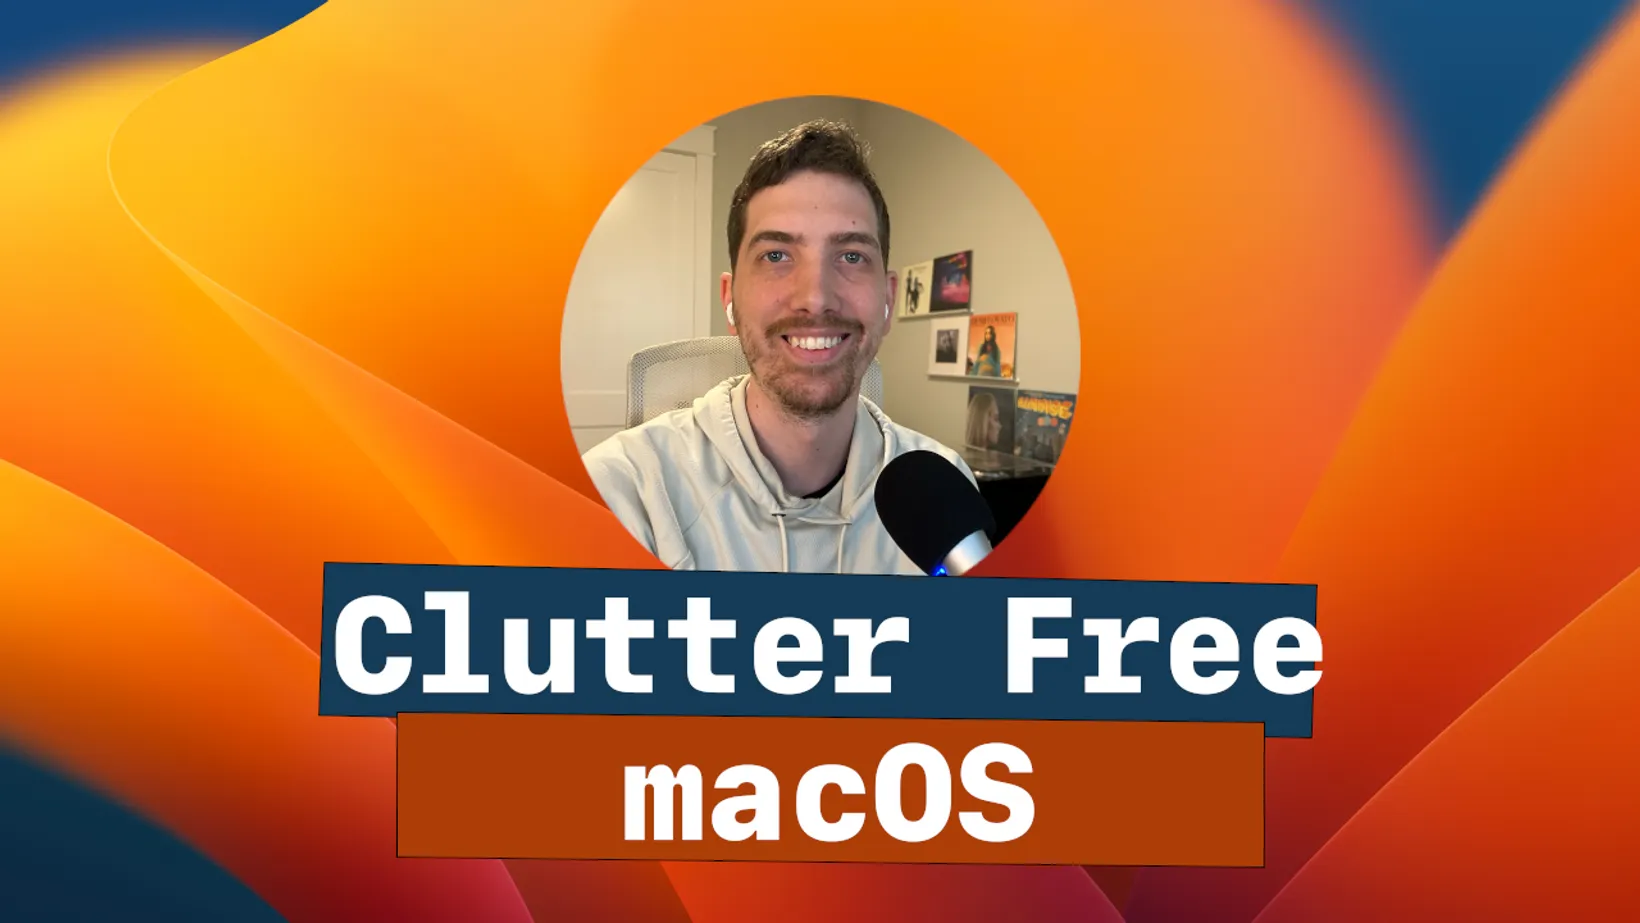 Clutter Free macOS hero